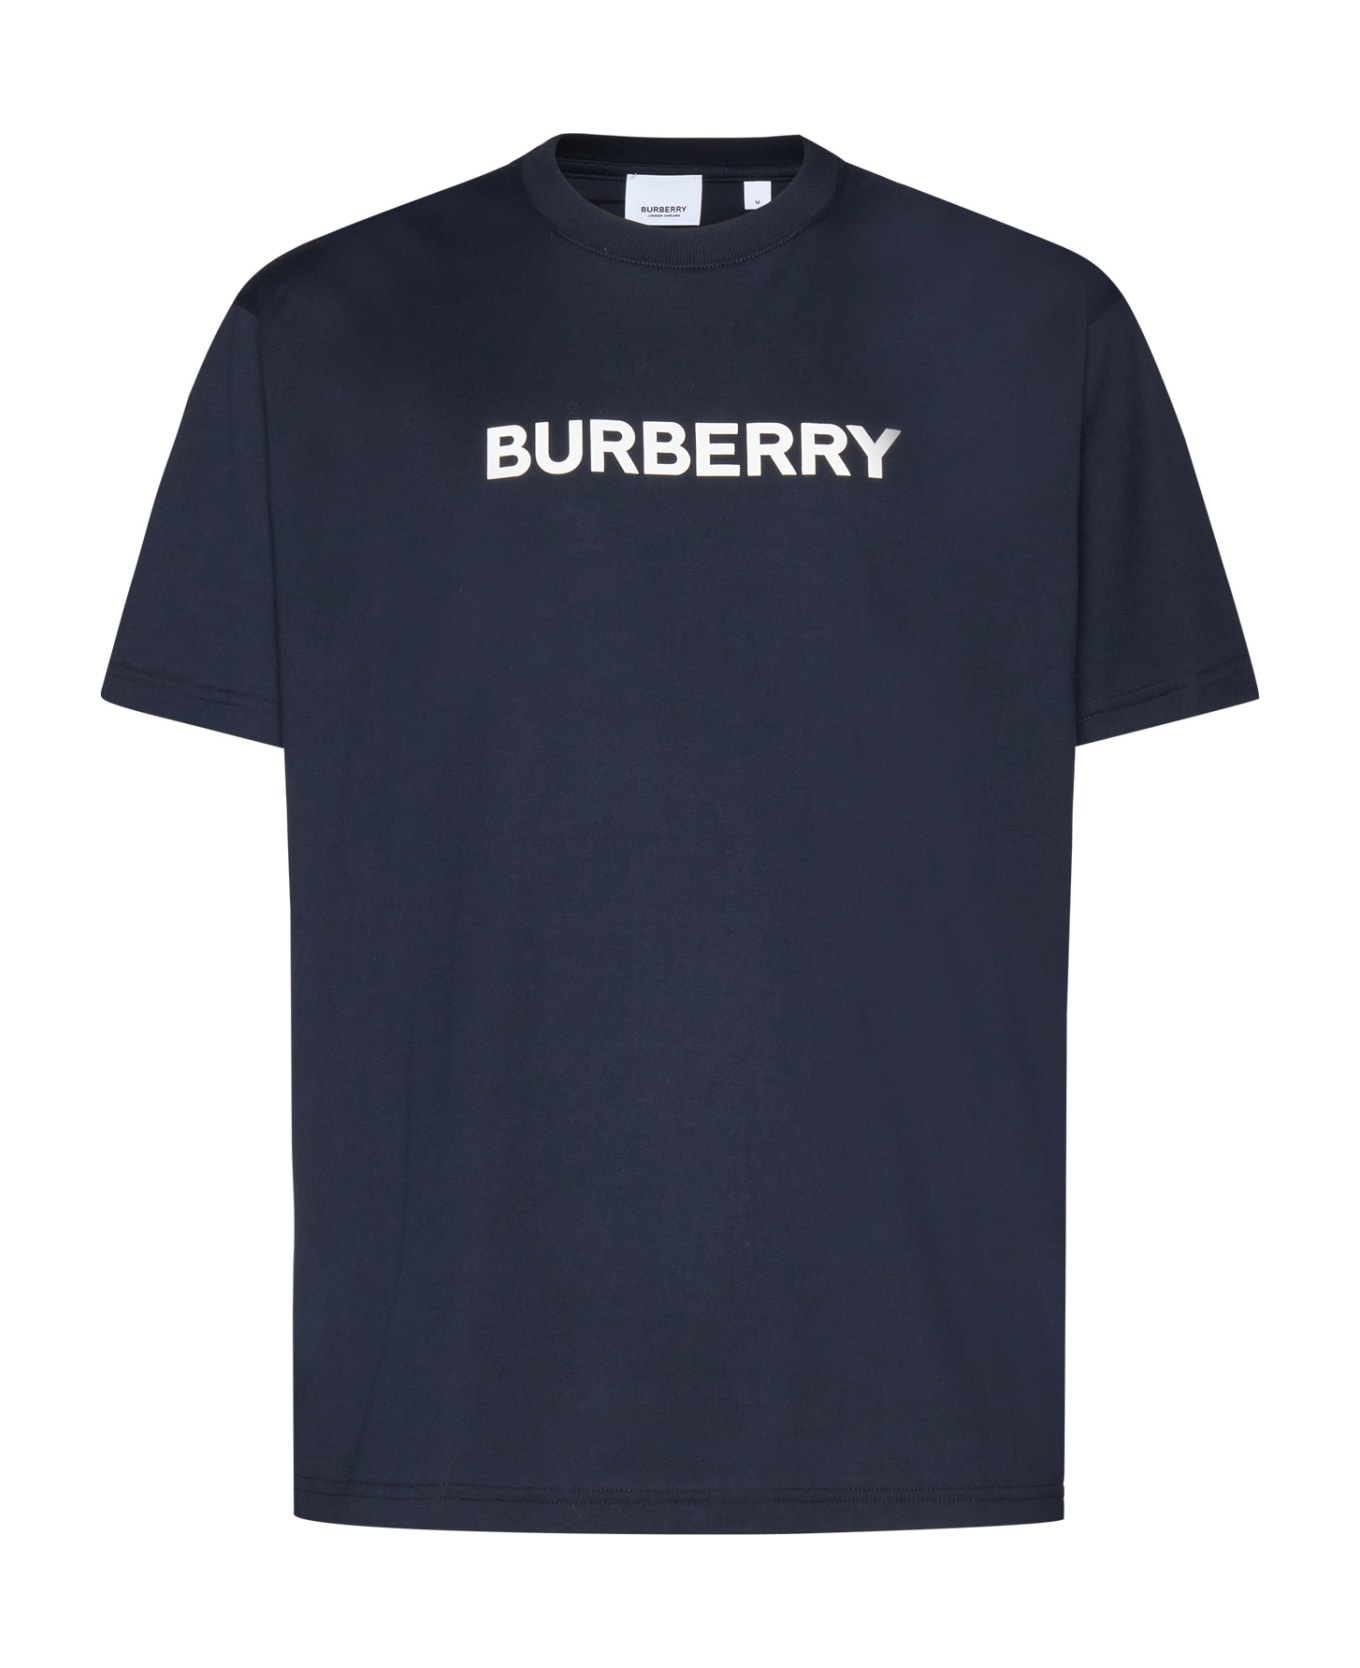 Burberry T-Shirt - larkhall branded sneakers Karierte burberry shoes black archivebeige